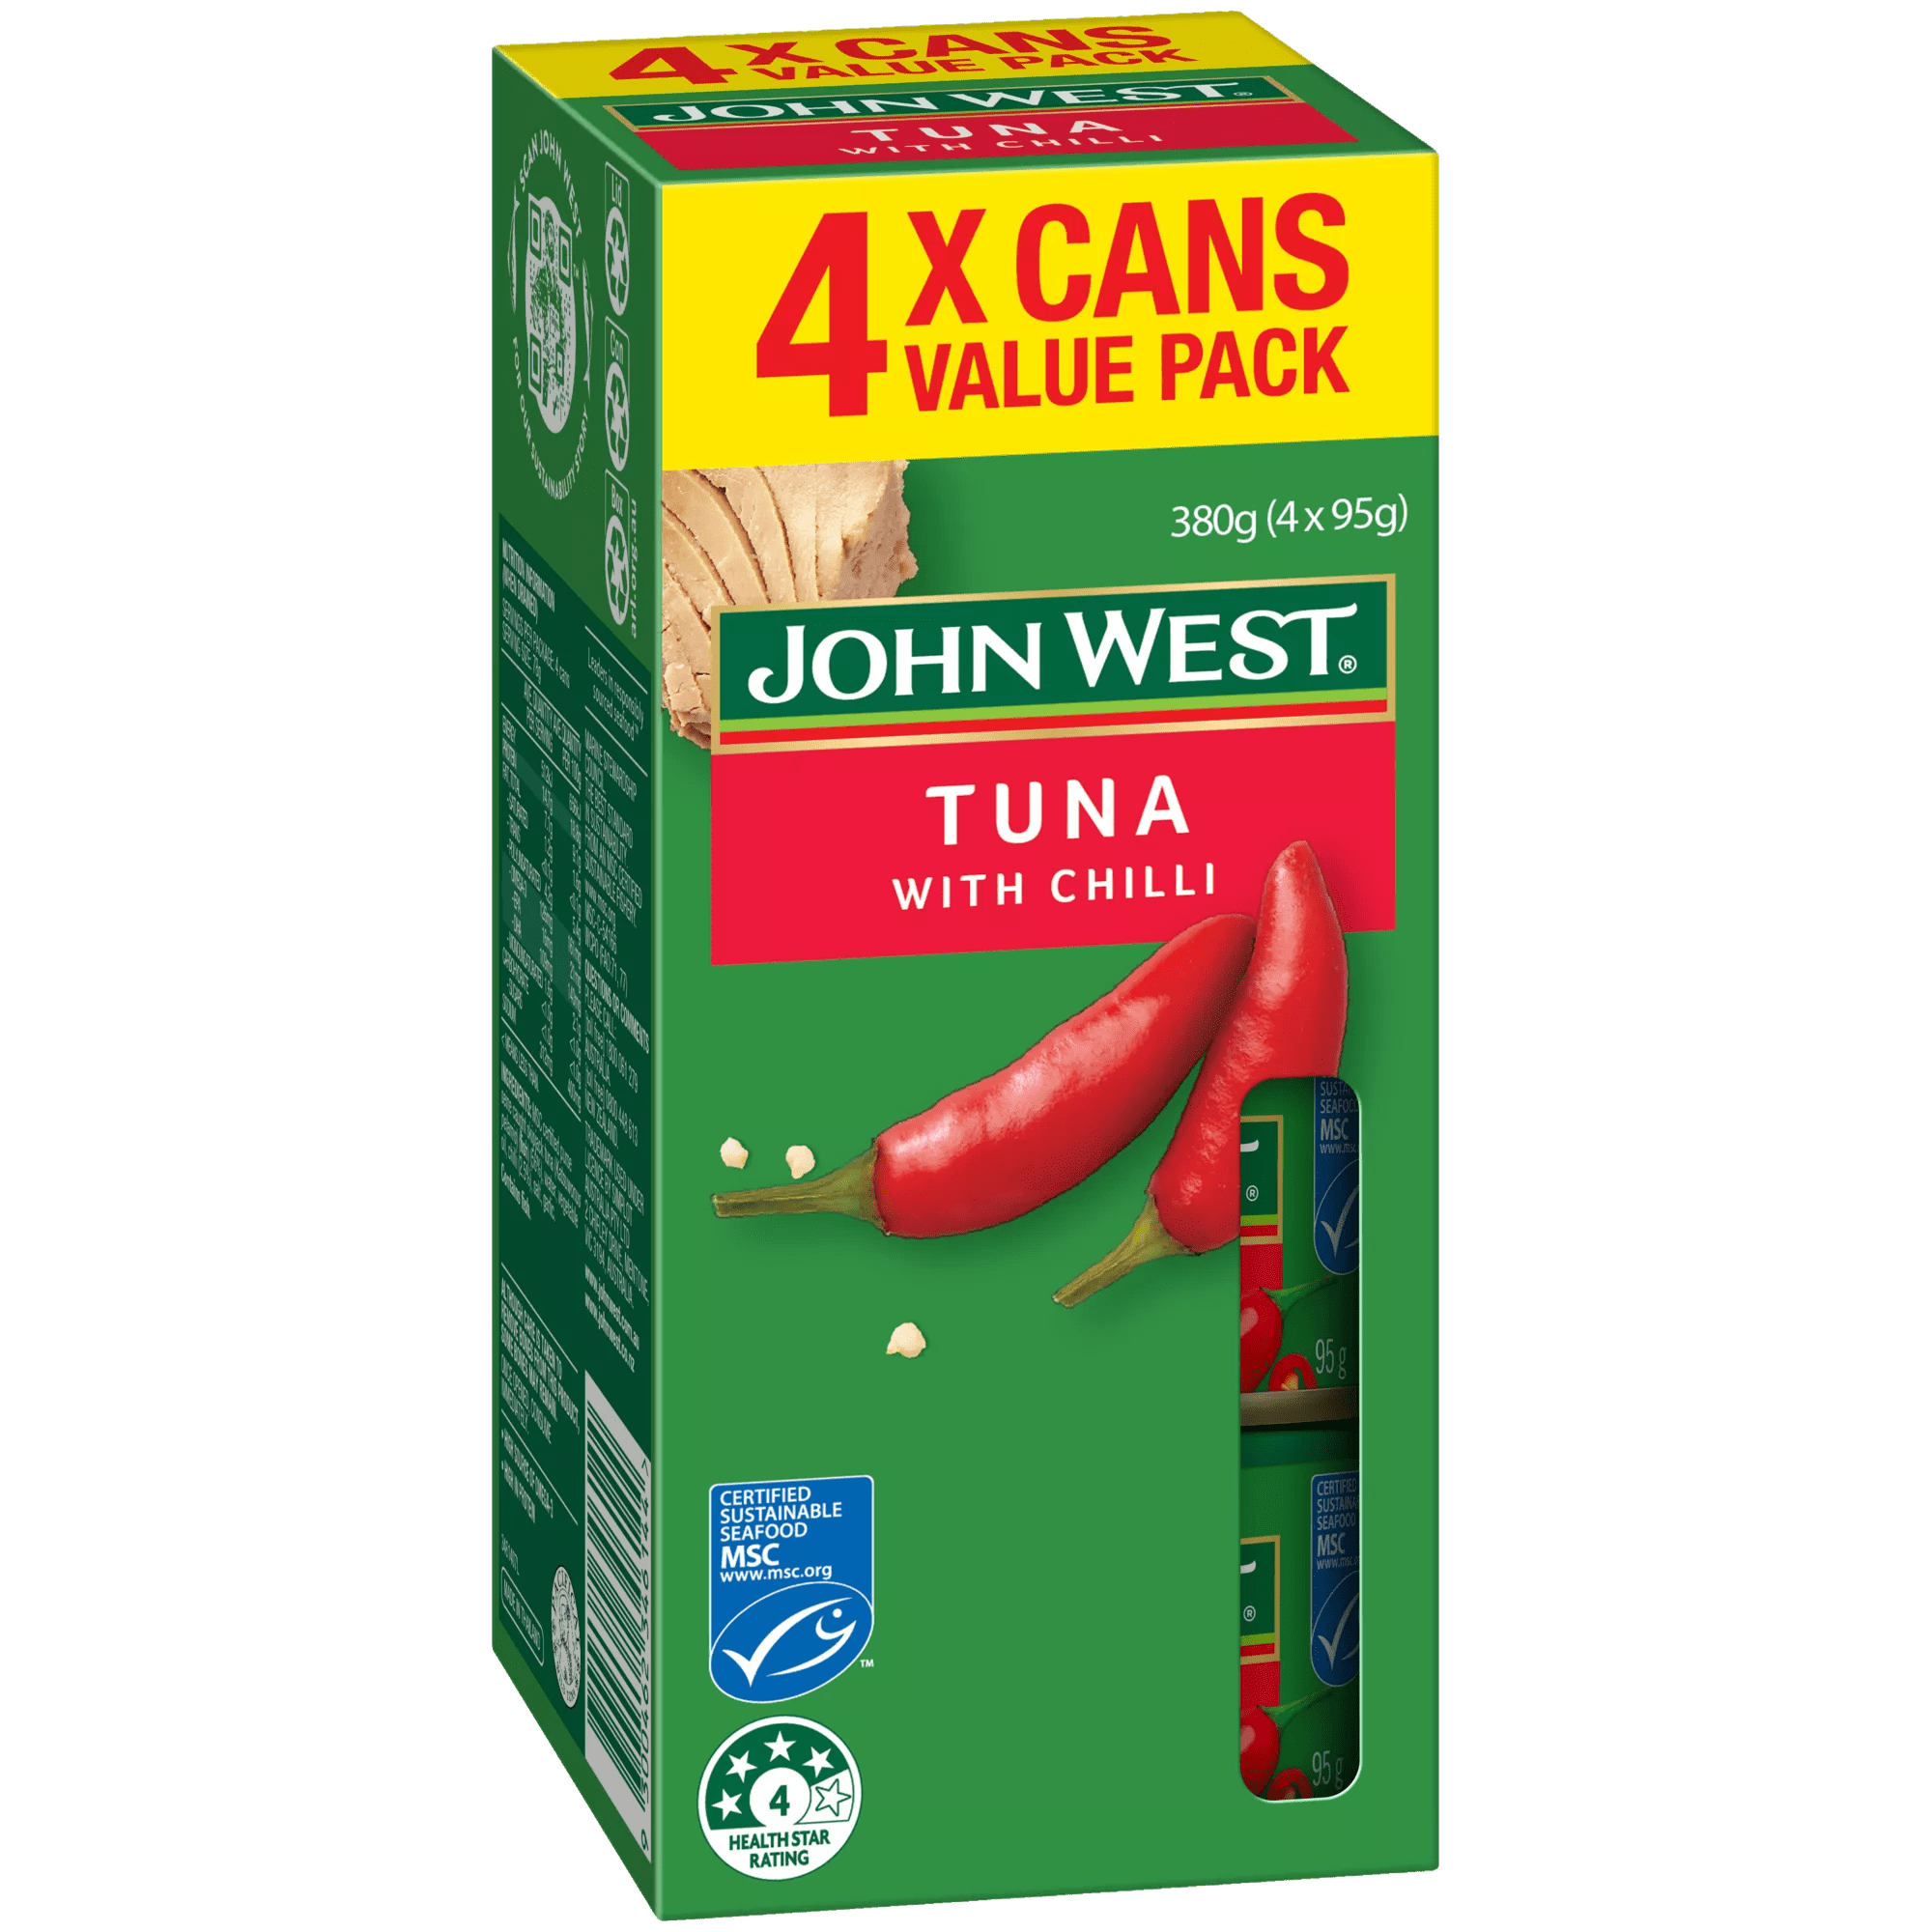 John West Tuna Chilli Multipack 6x4x95g